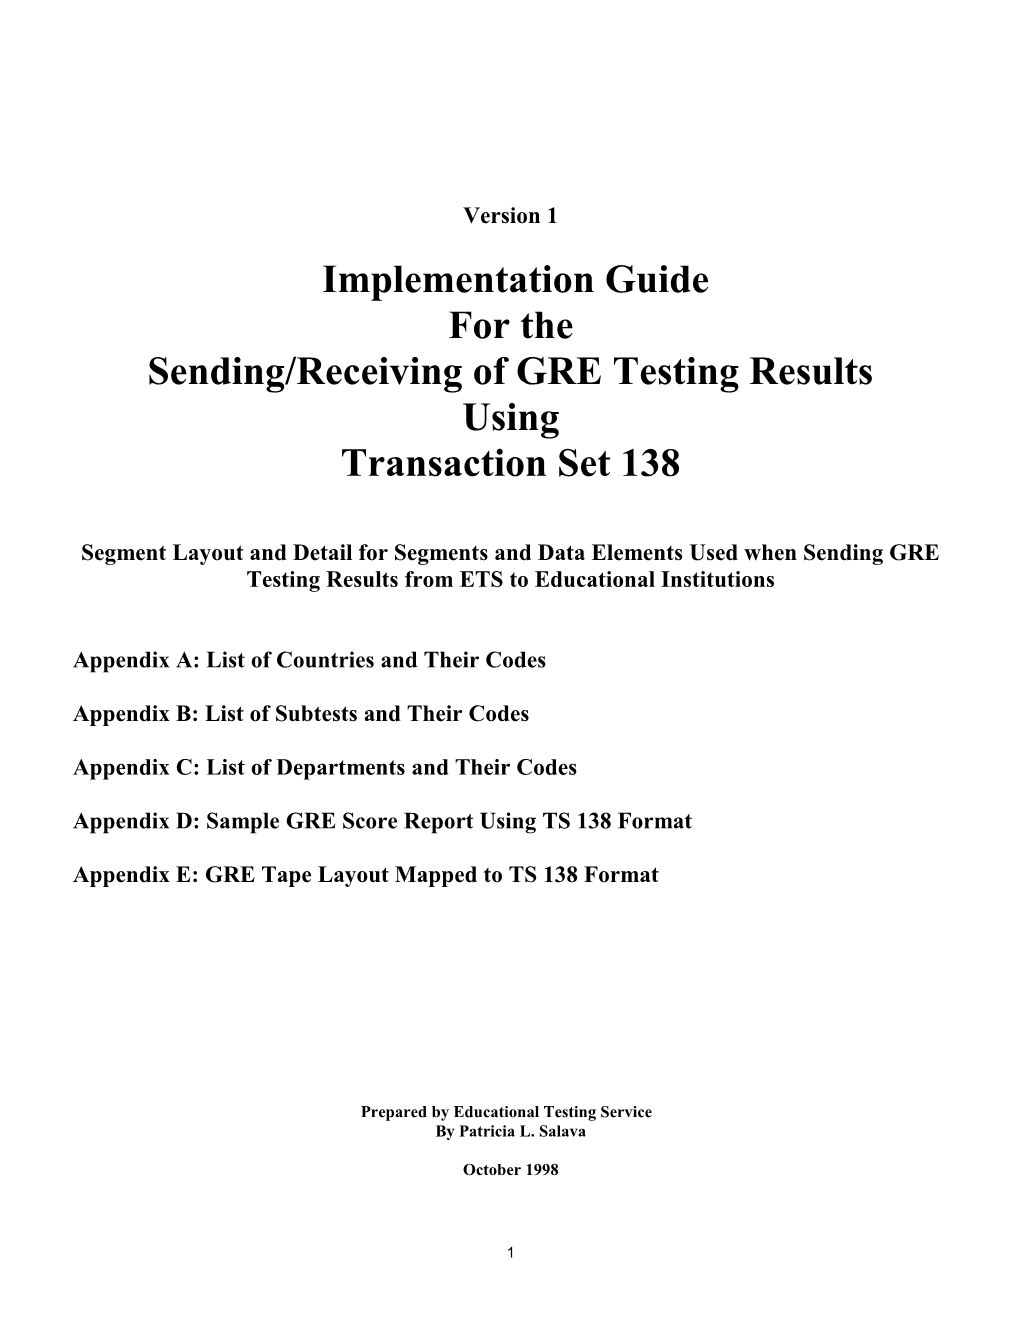 Sending/Receiving of GRE Testing Results